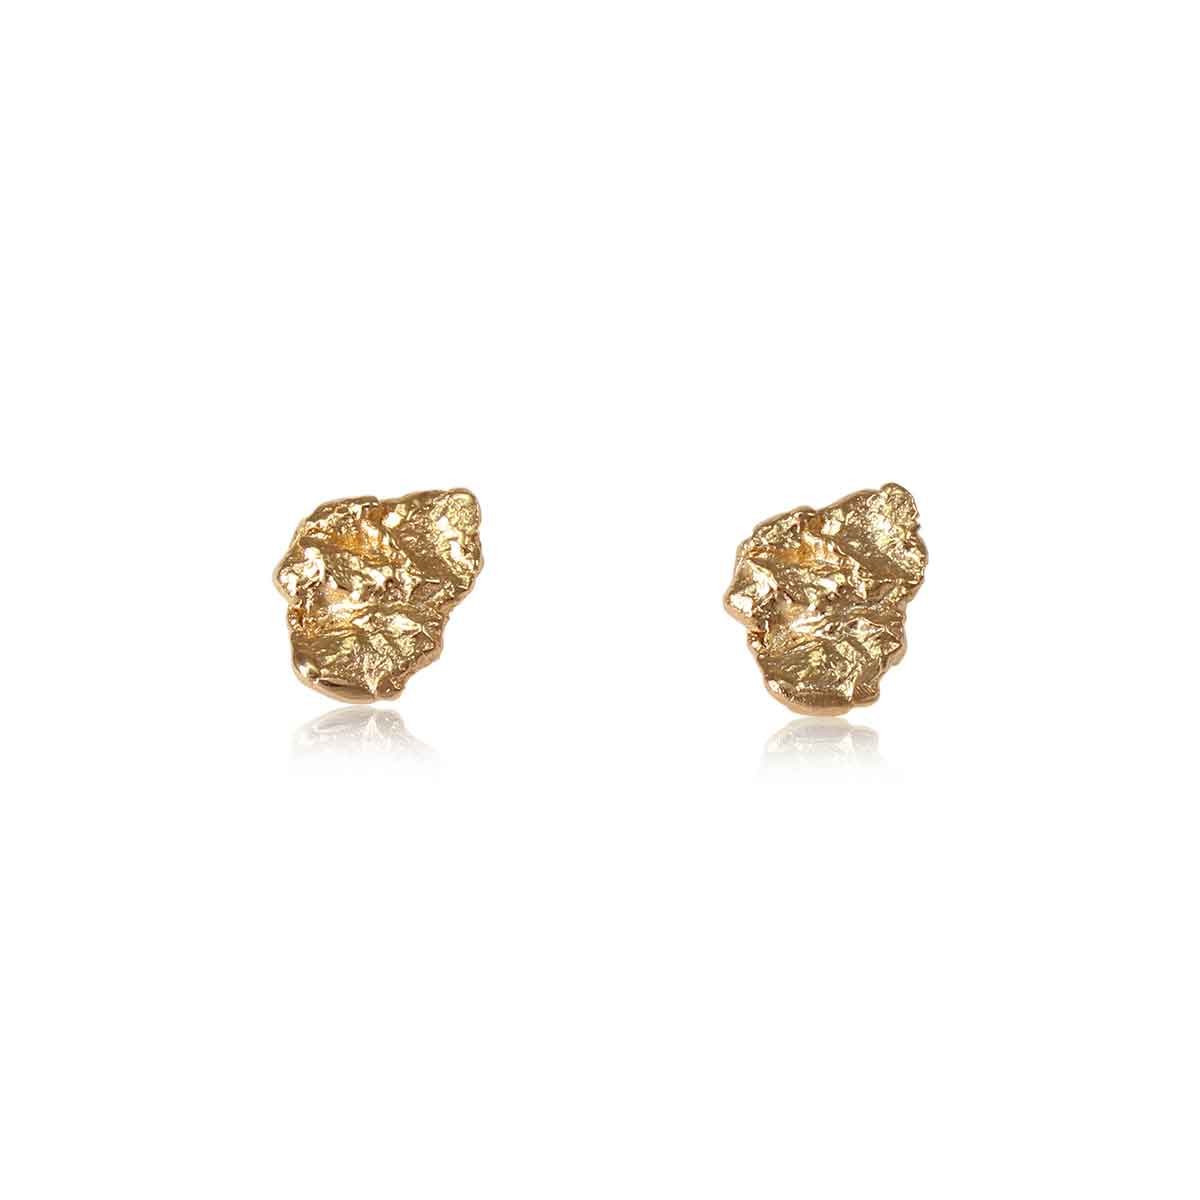 Glam Rocker Golden earrings